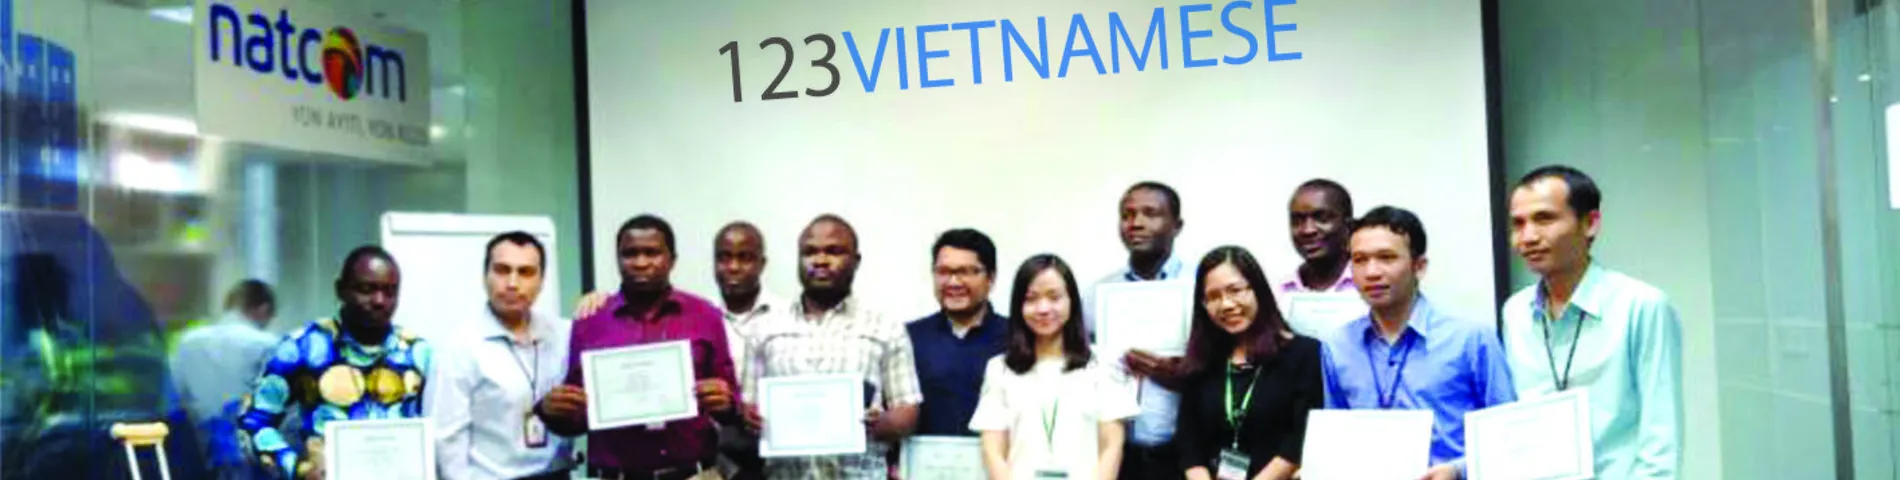 123 Vietnamese Center picture 1